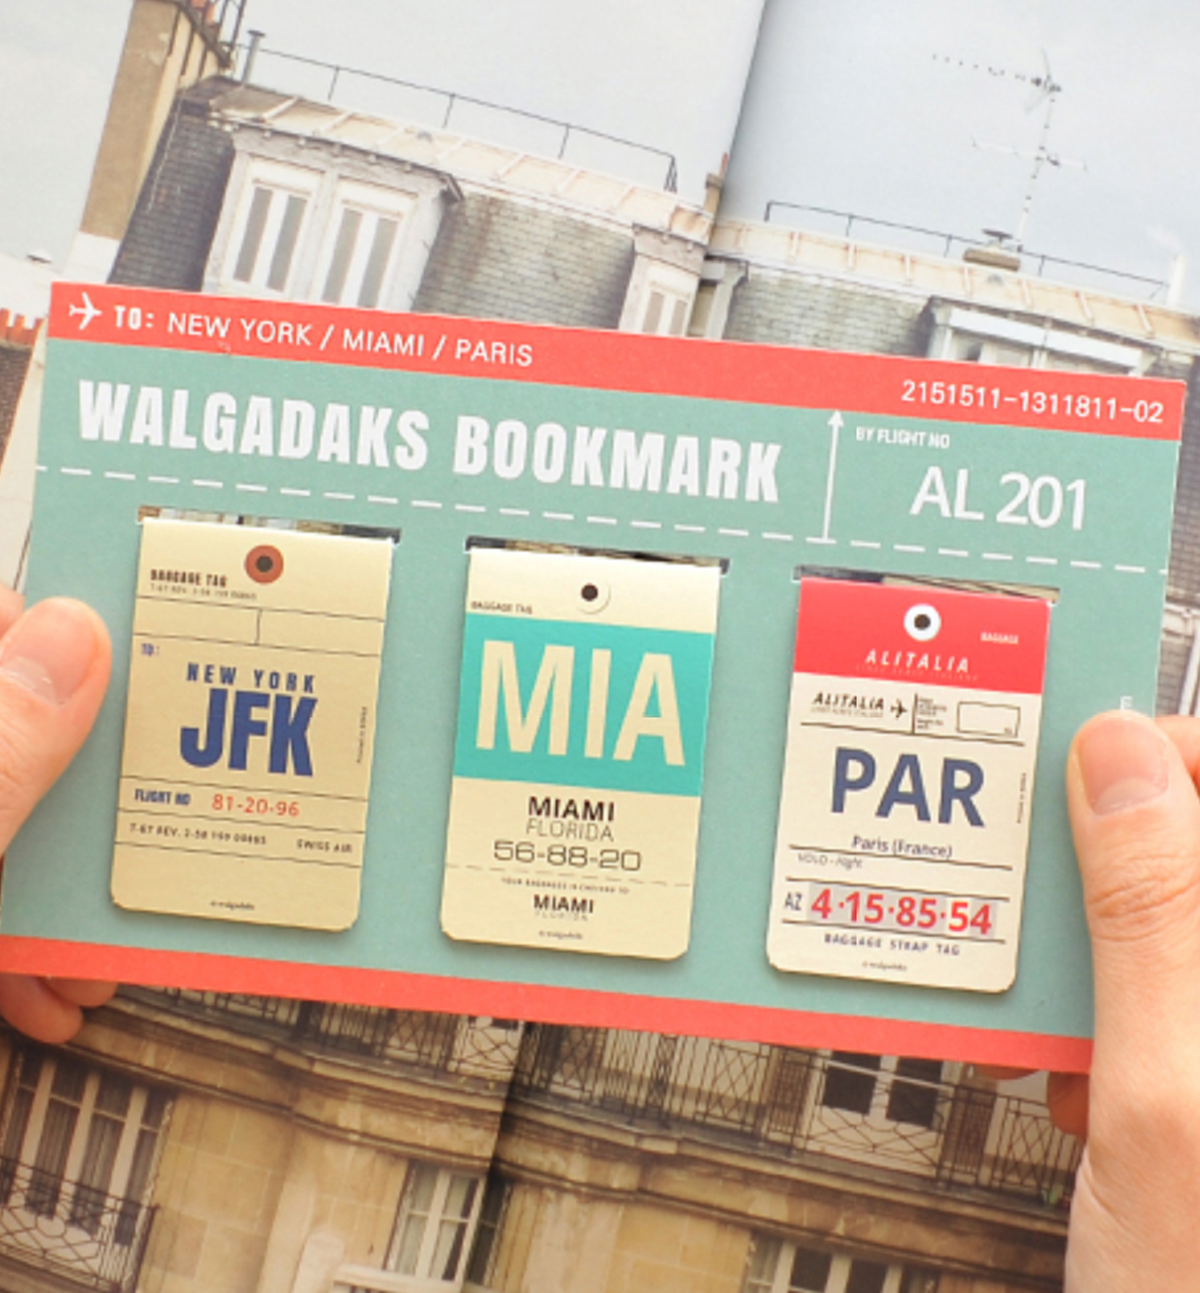 3 Arline Tag Magnetic Bookmark [AL201]